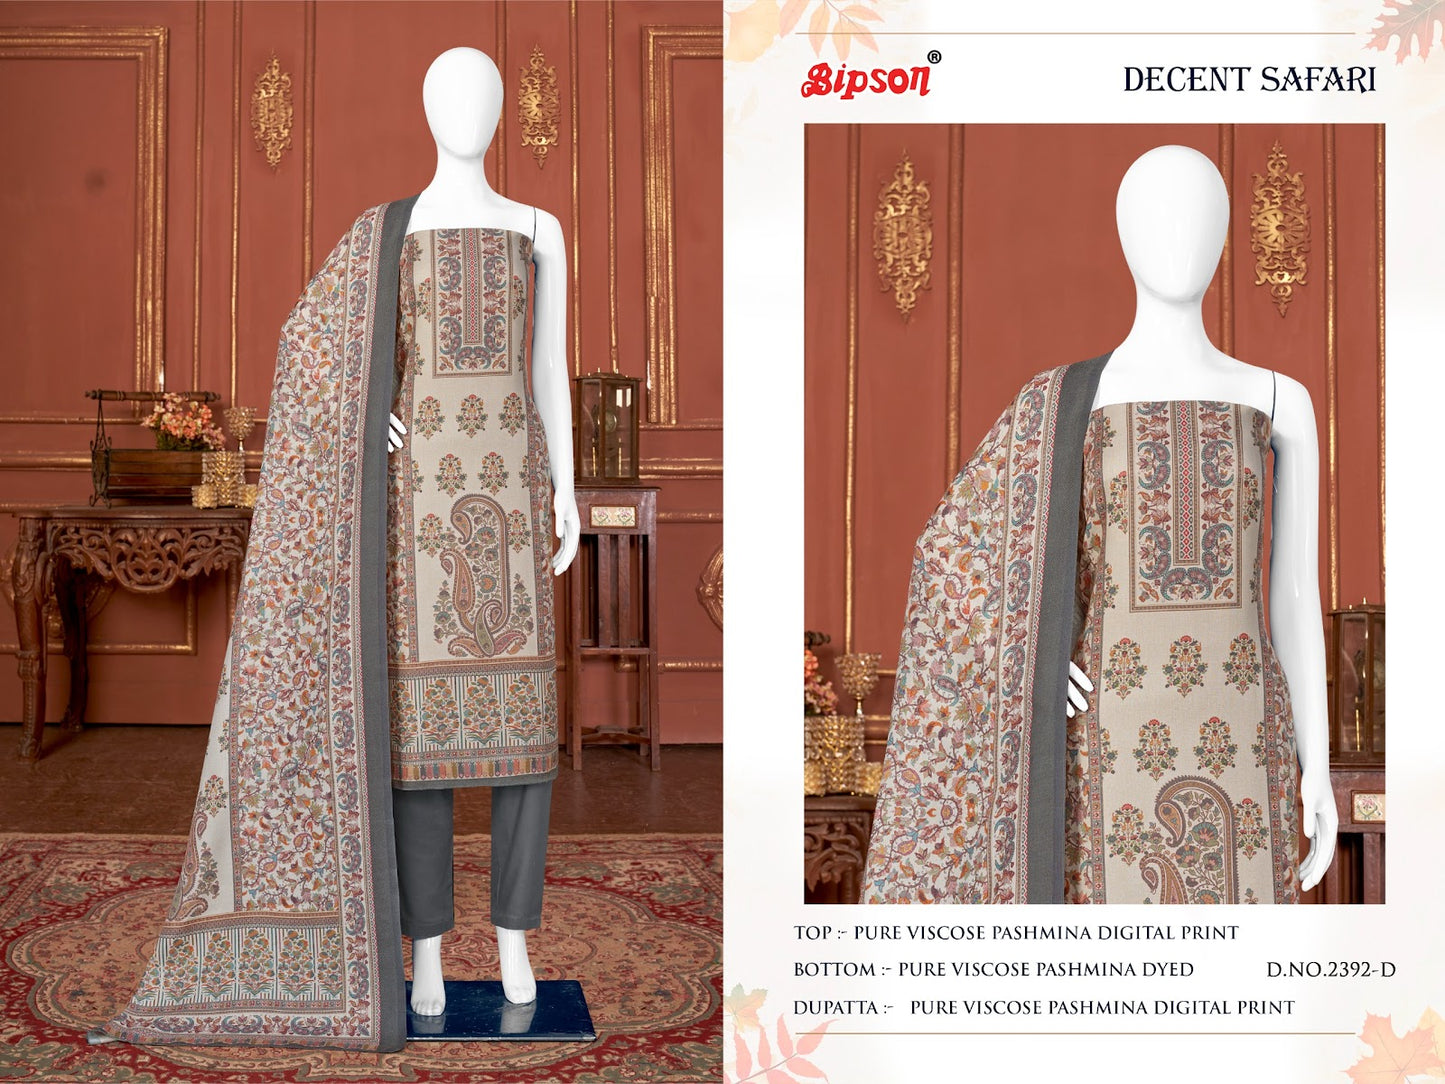 Decent Safari-2392 Bipson Prints Viscose Pashmina Suits